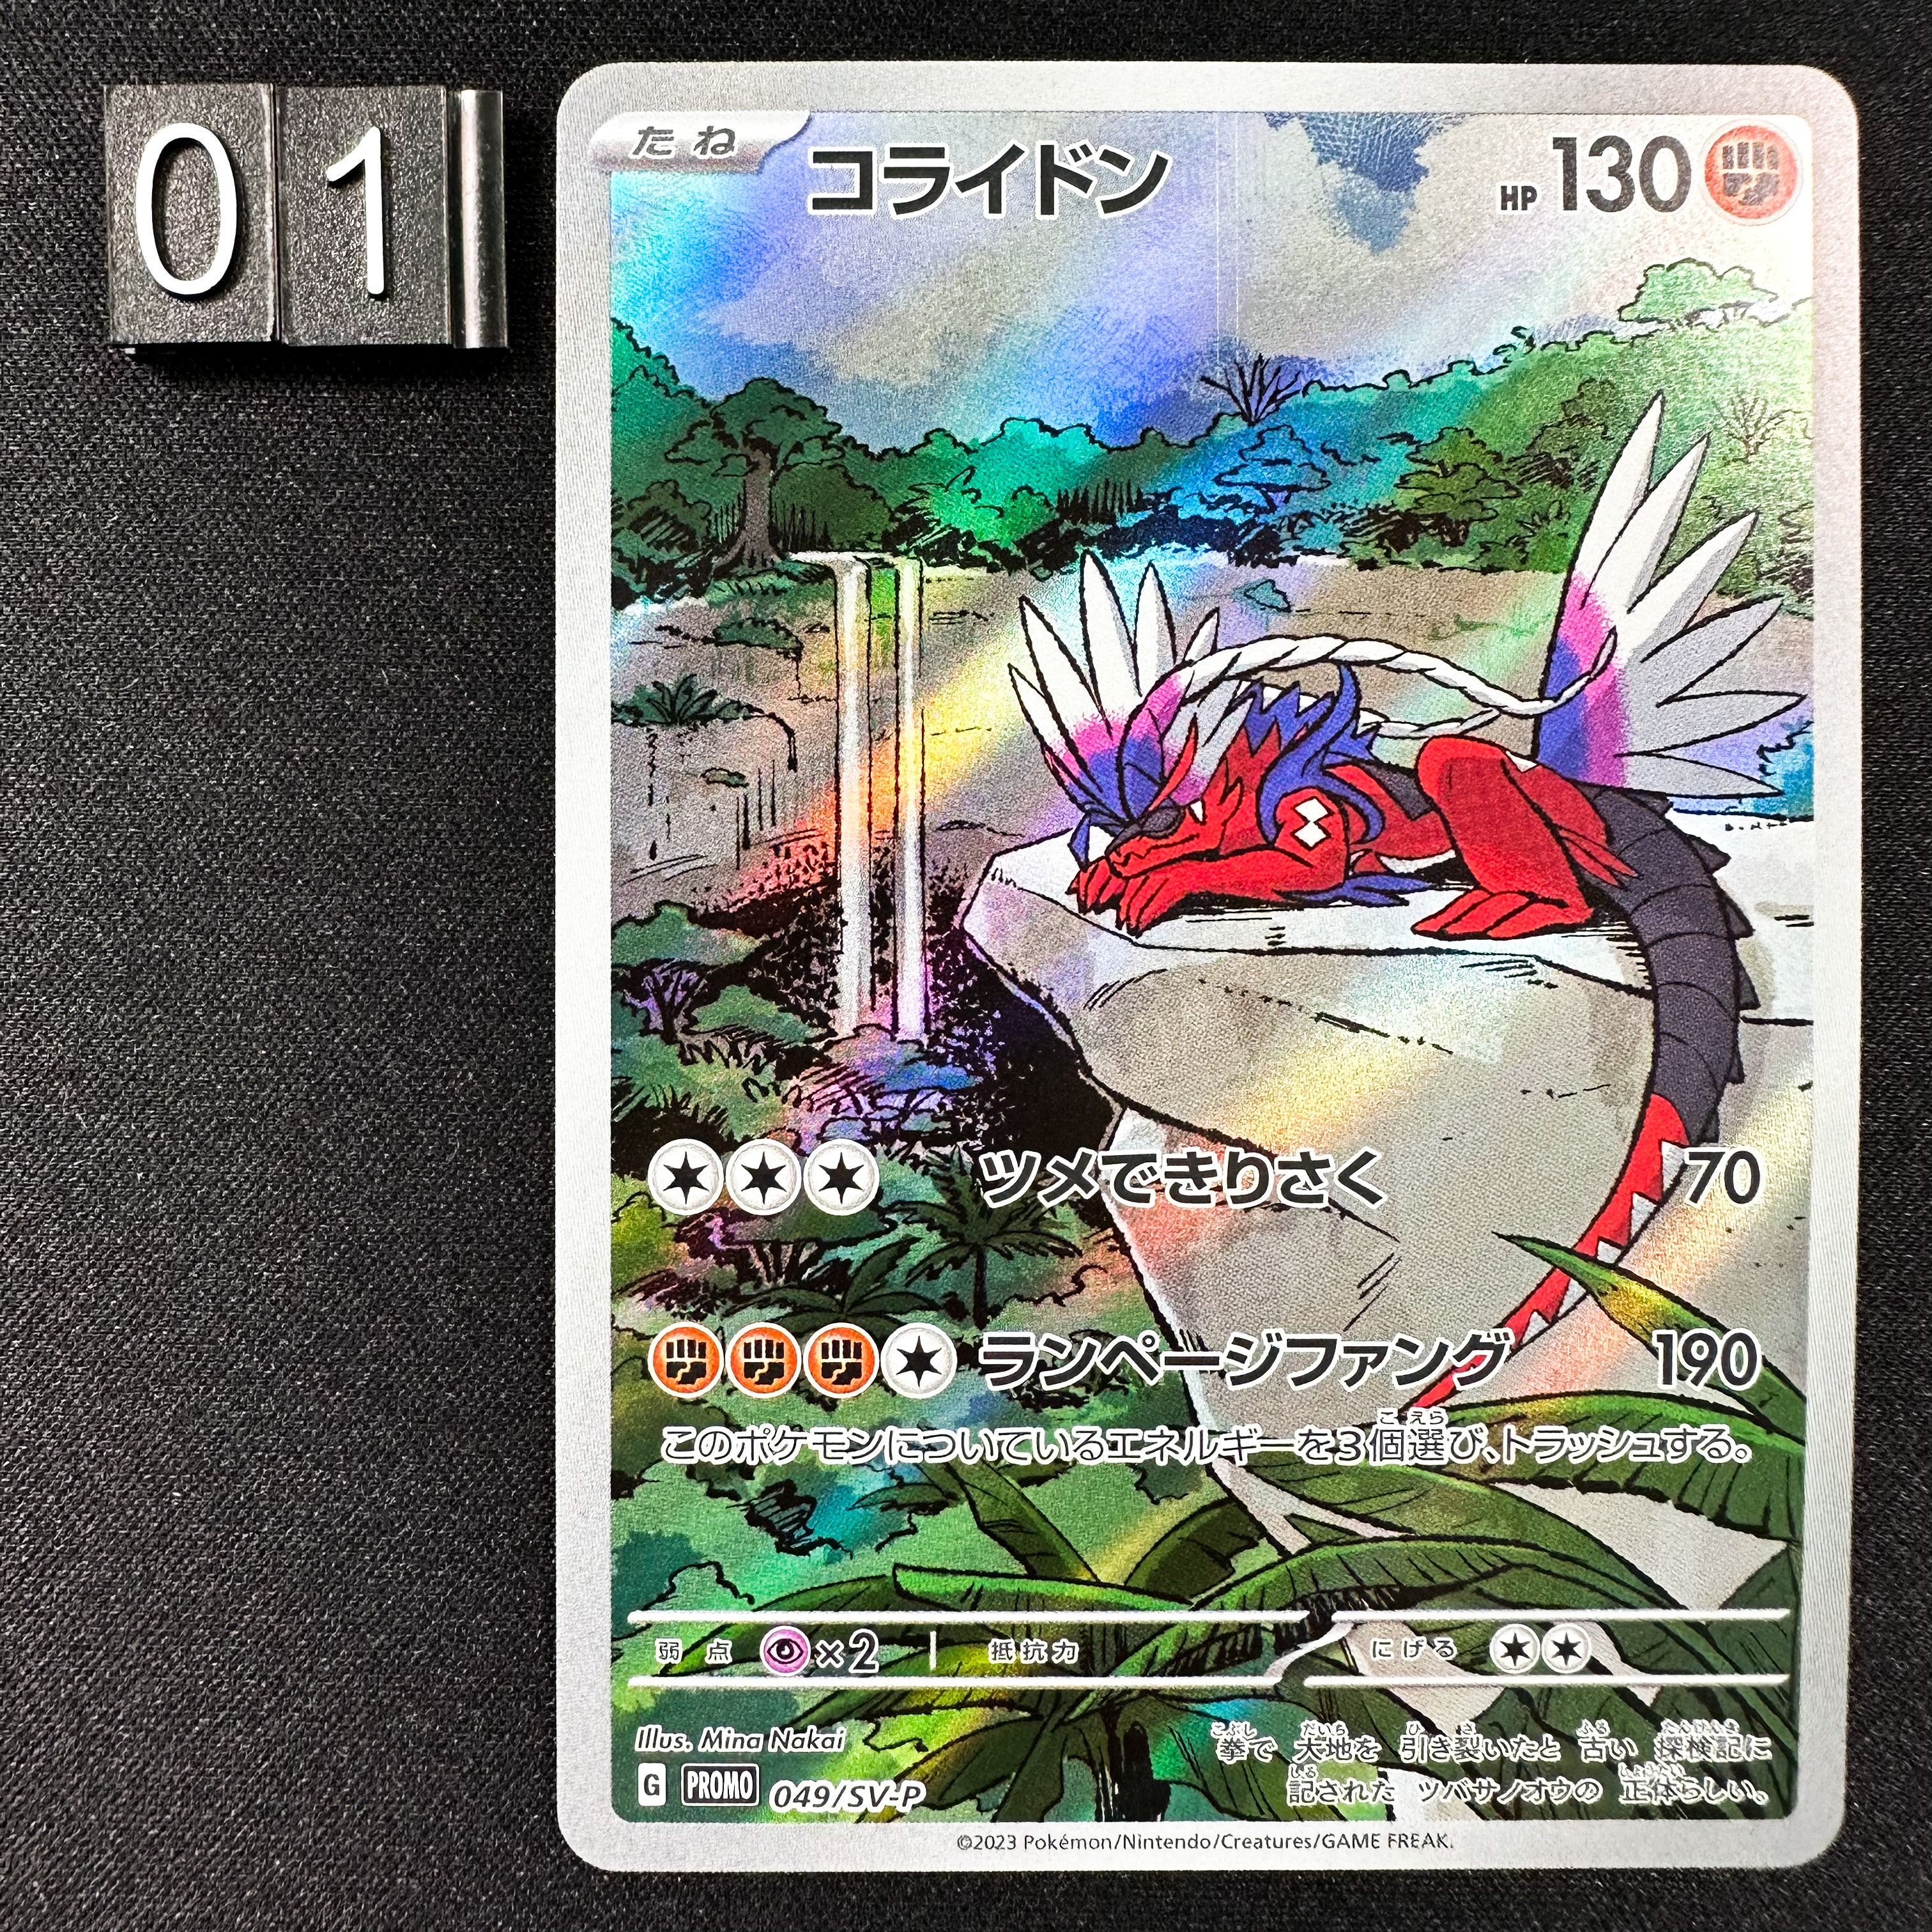 Pokémon Card Game SCARLET & VIOLET PROMO 049/SV-P